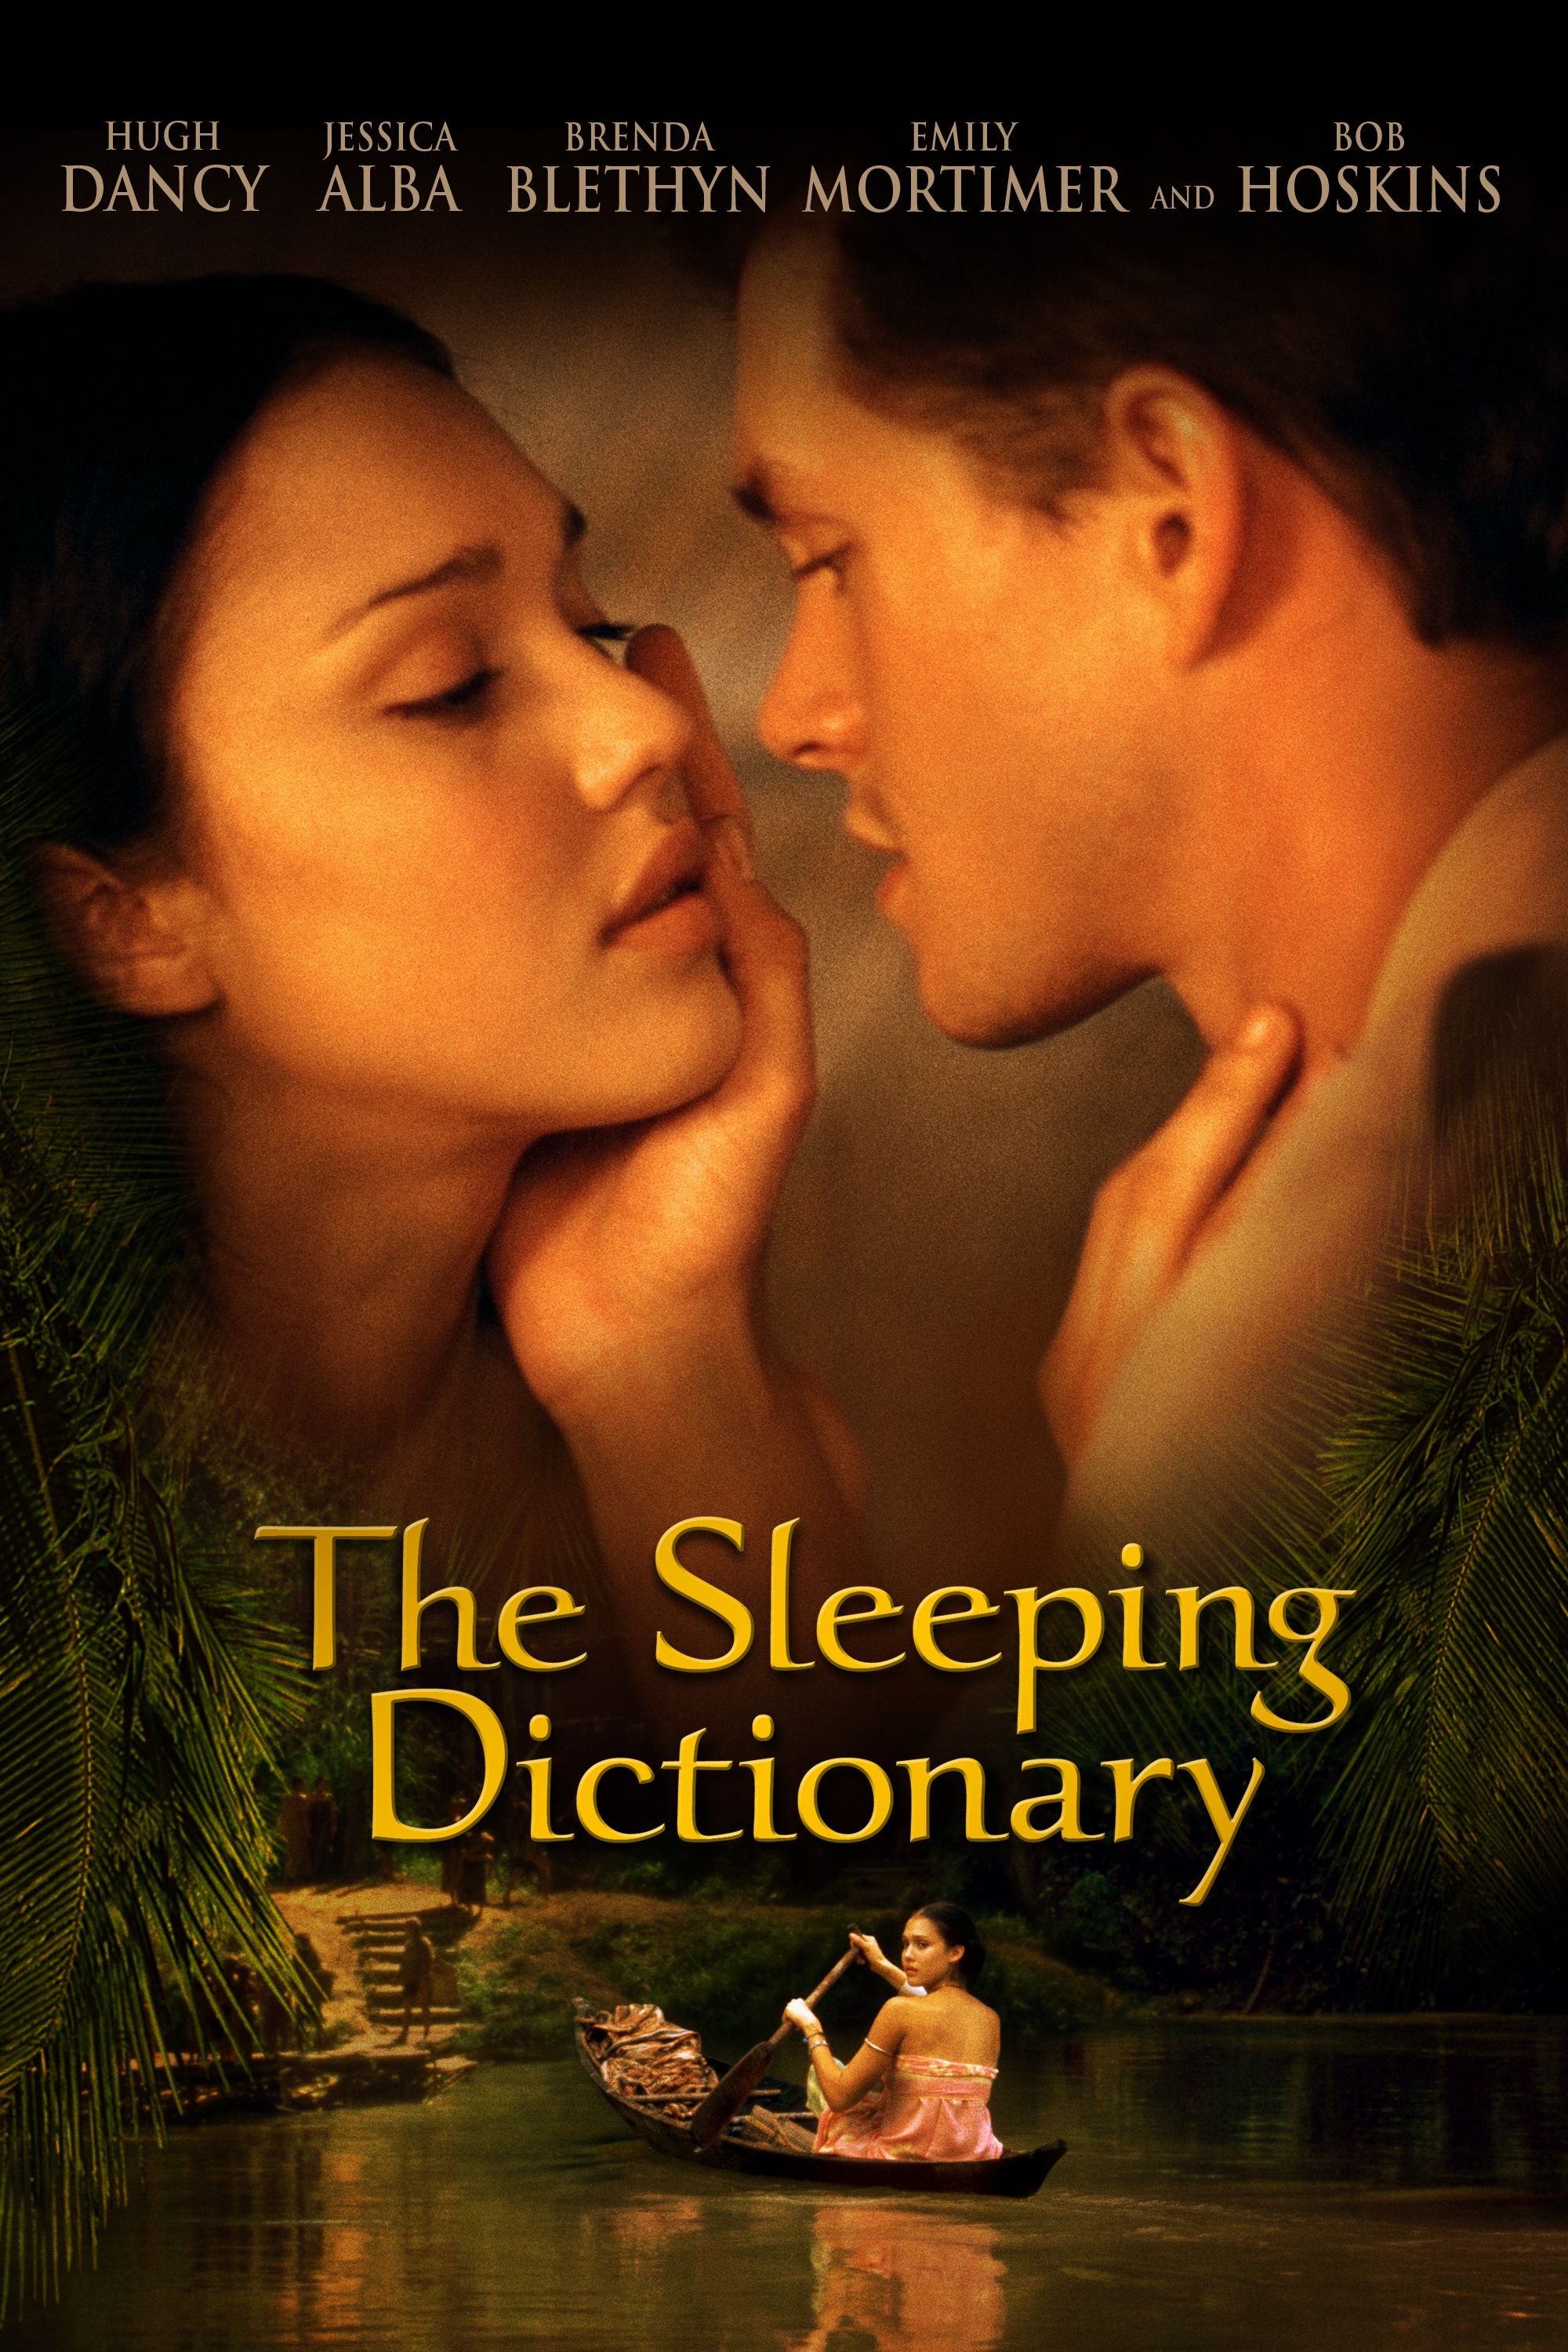 Sleeping dictionary movie watch online